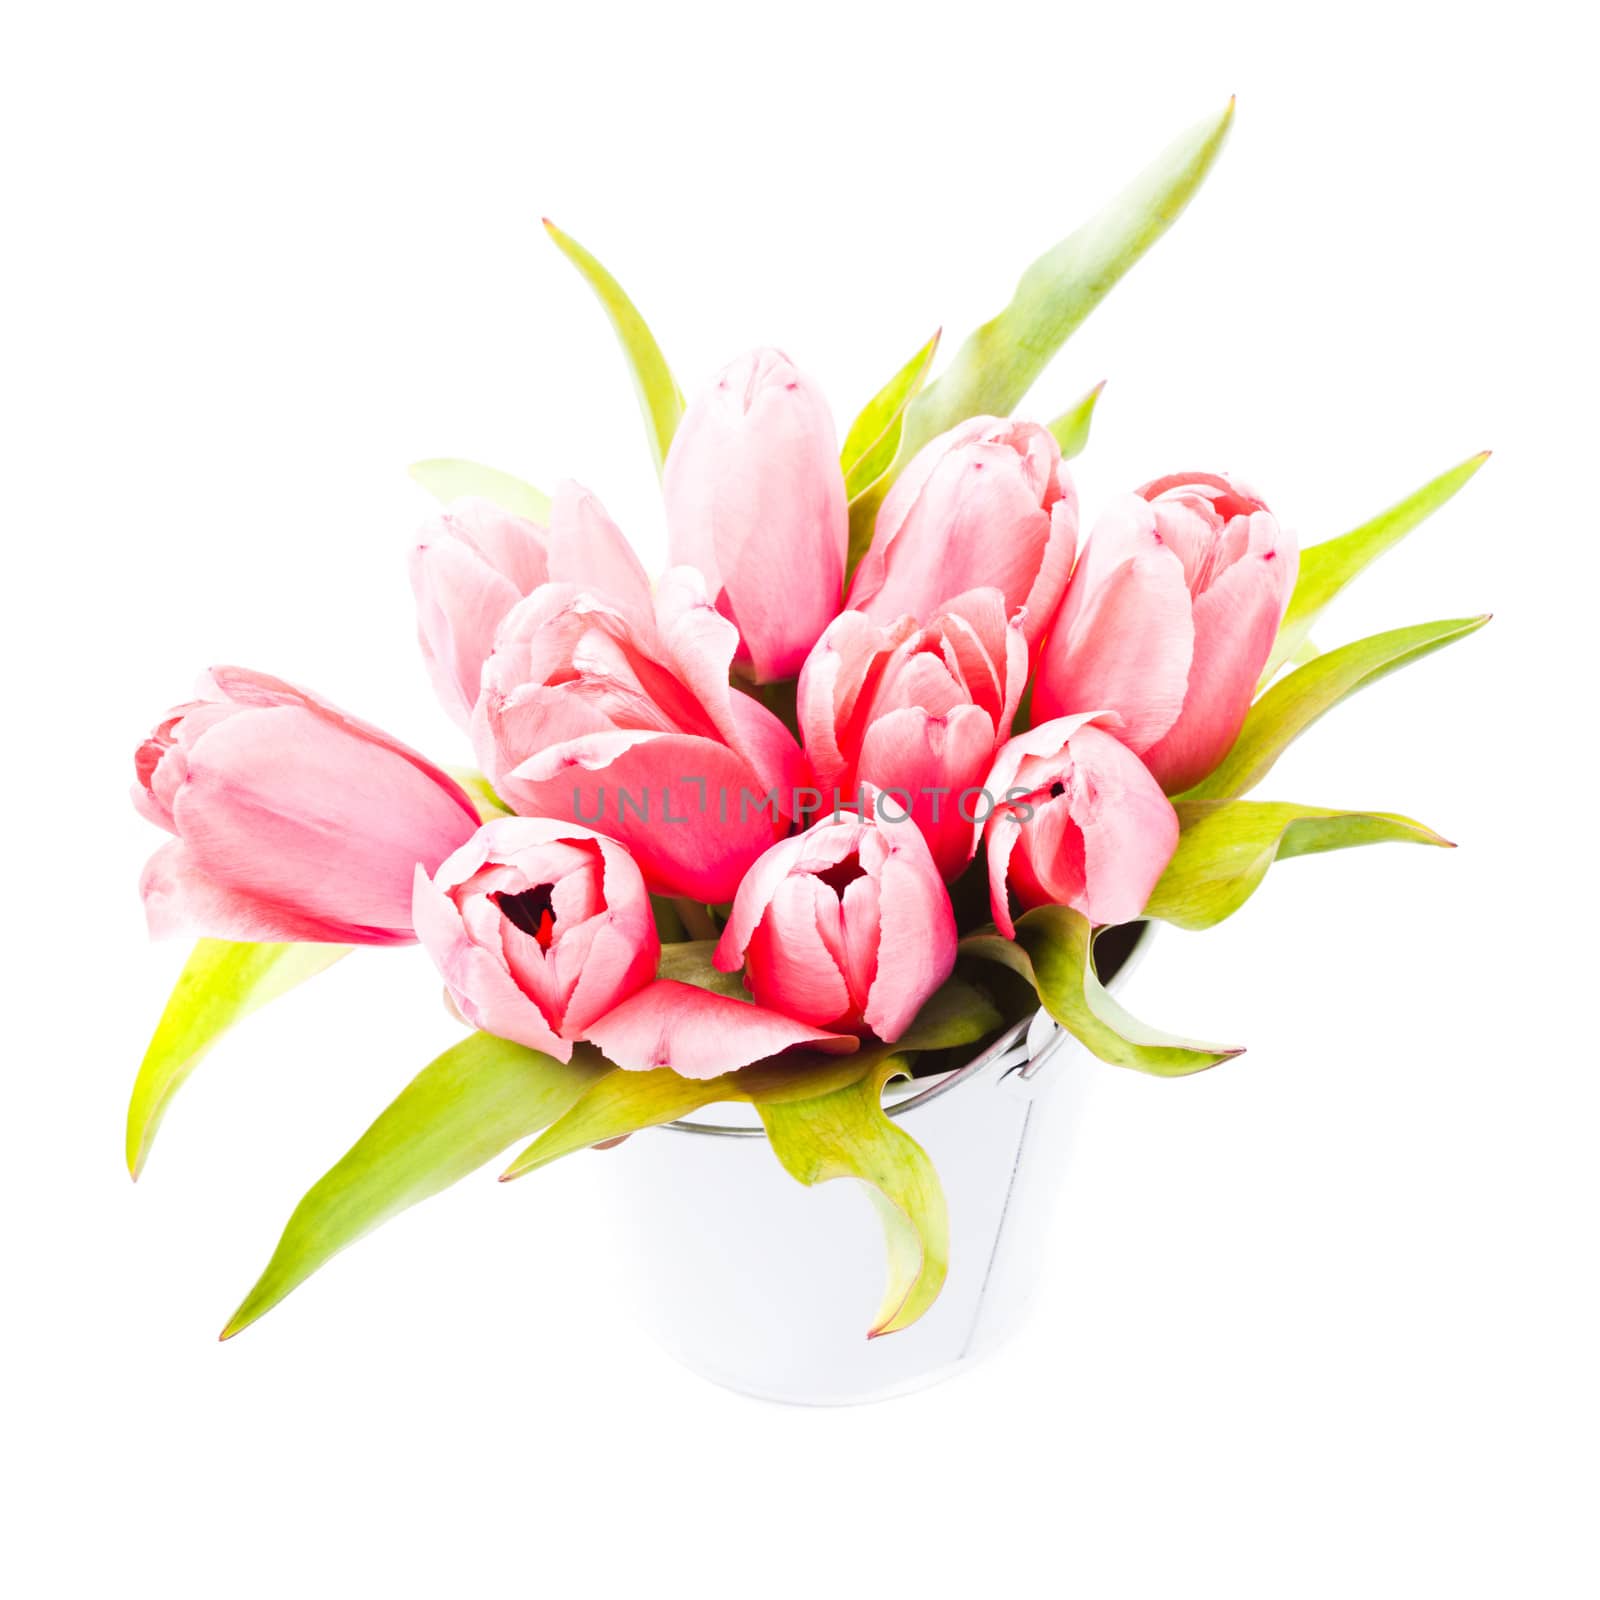 Pink tulips in decorative bucket closeup